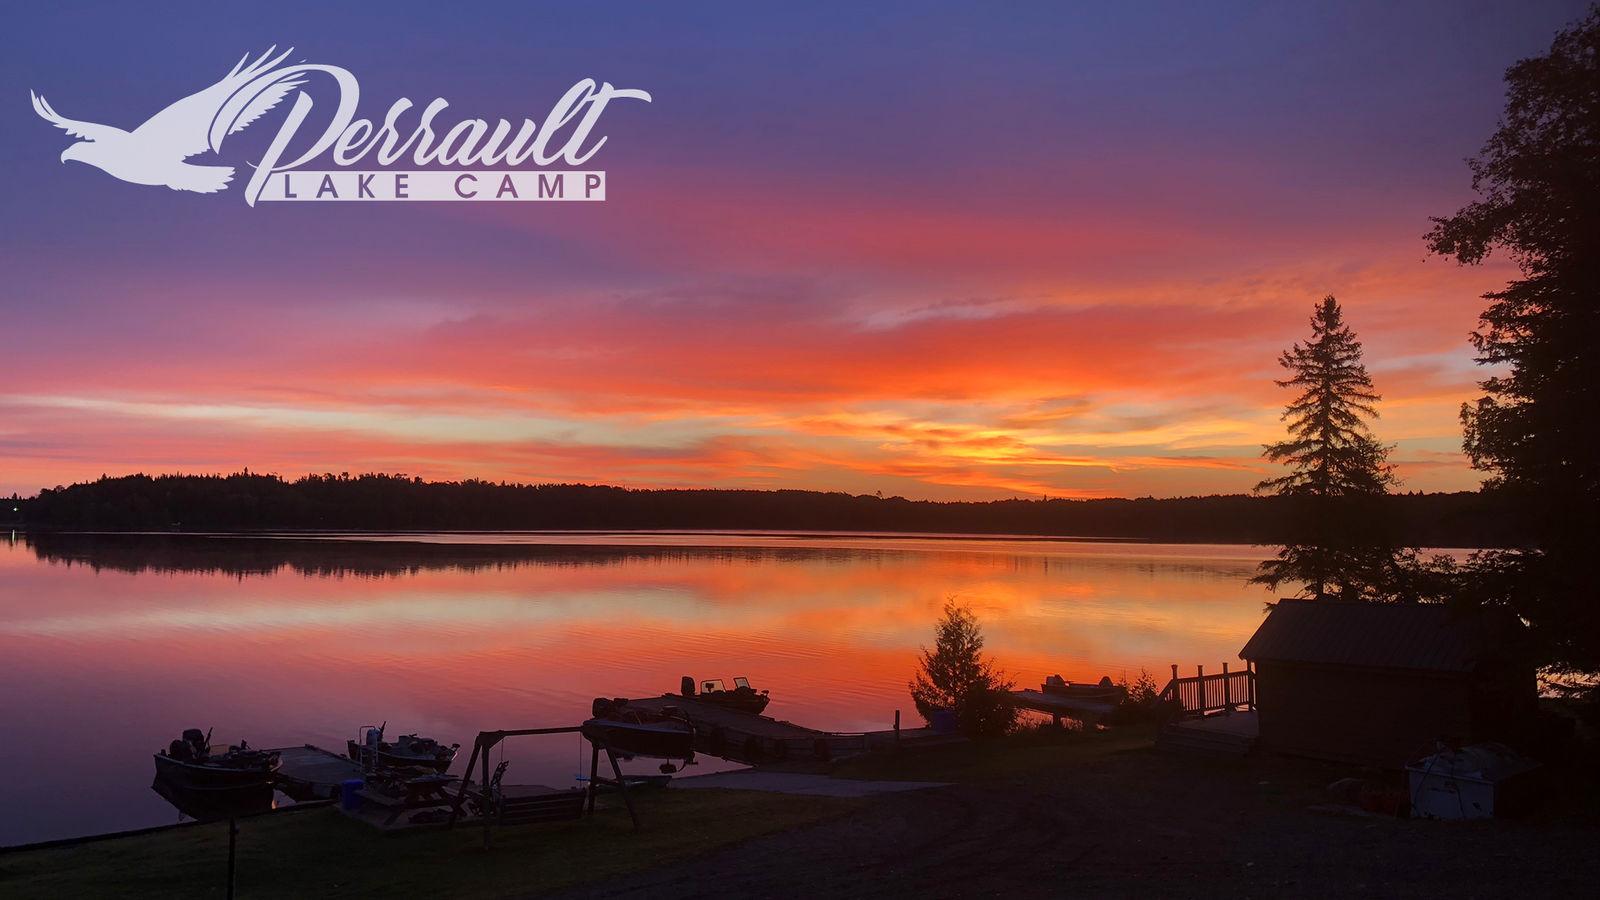 Perrault Lake Camp. Sunset Country, Ontario, Canada